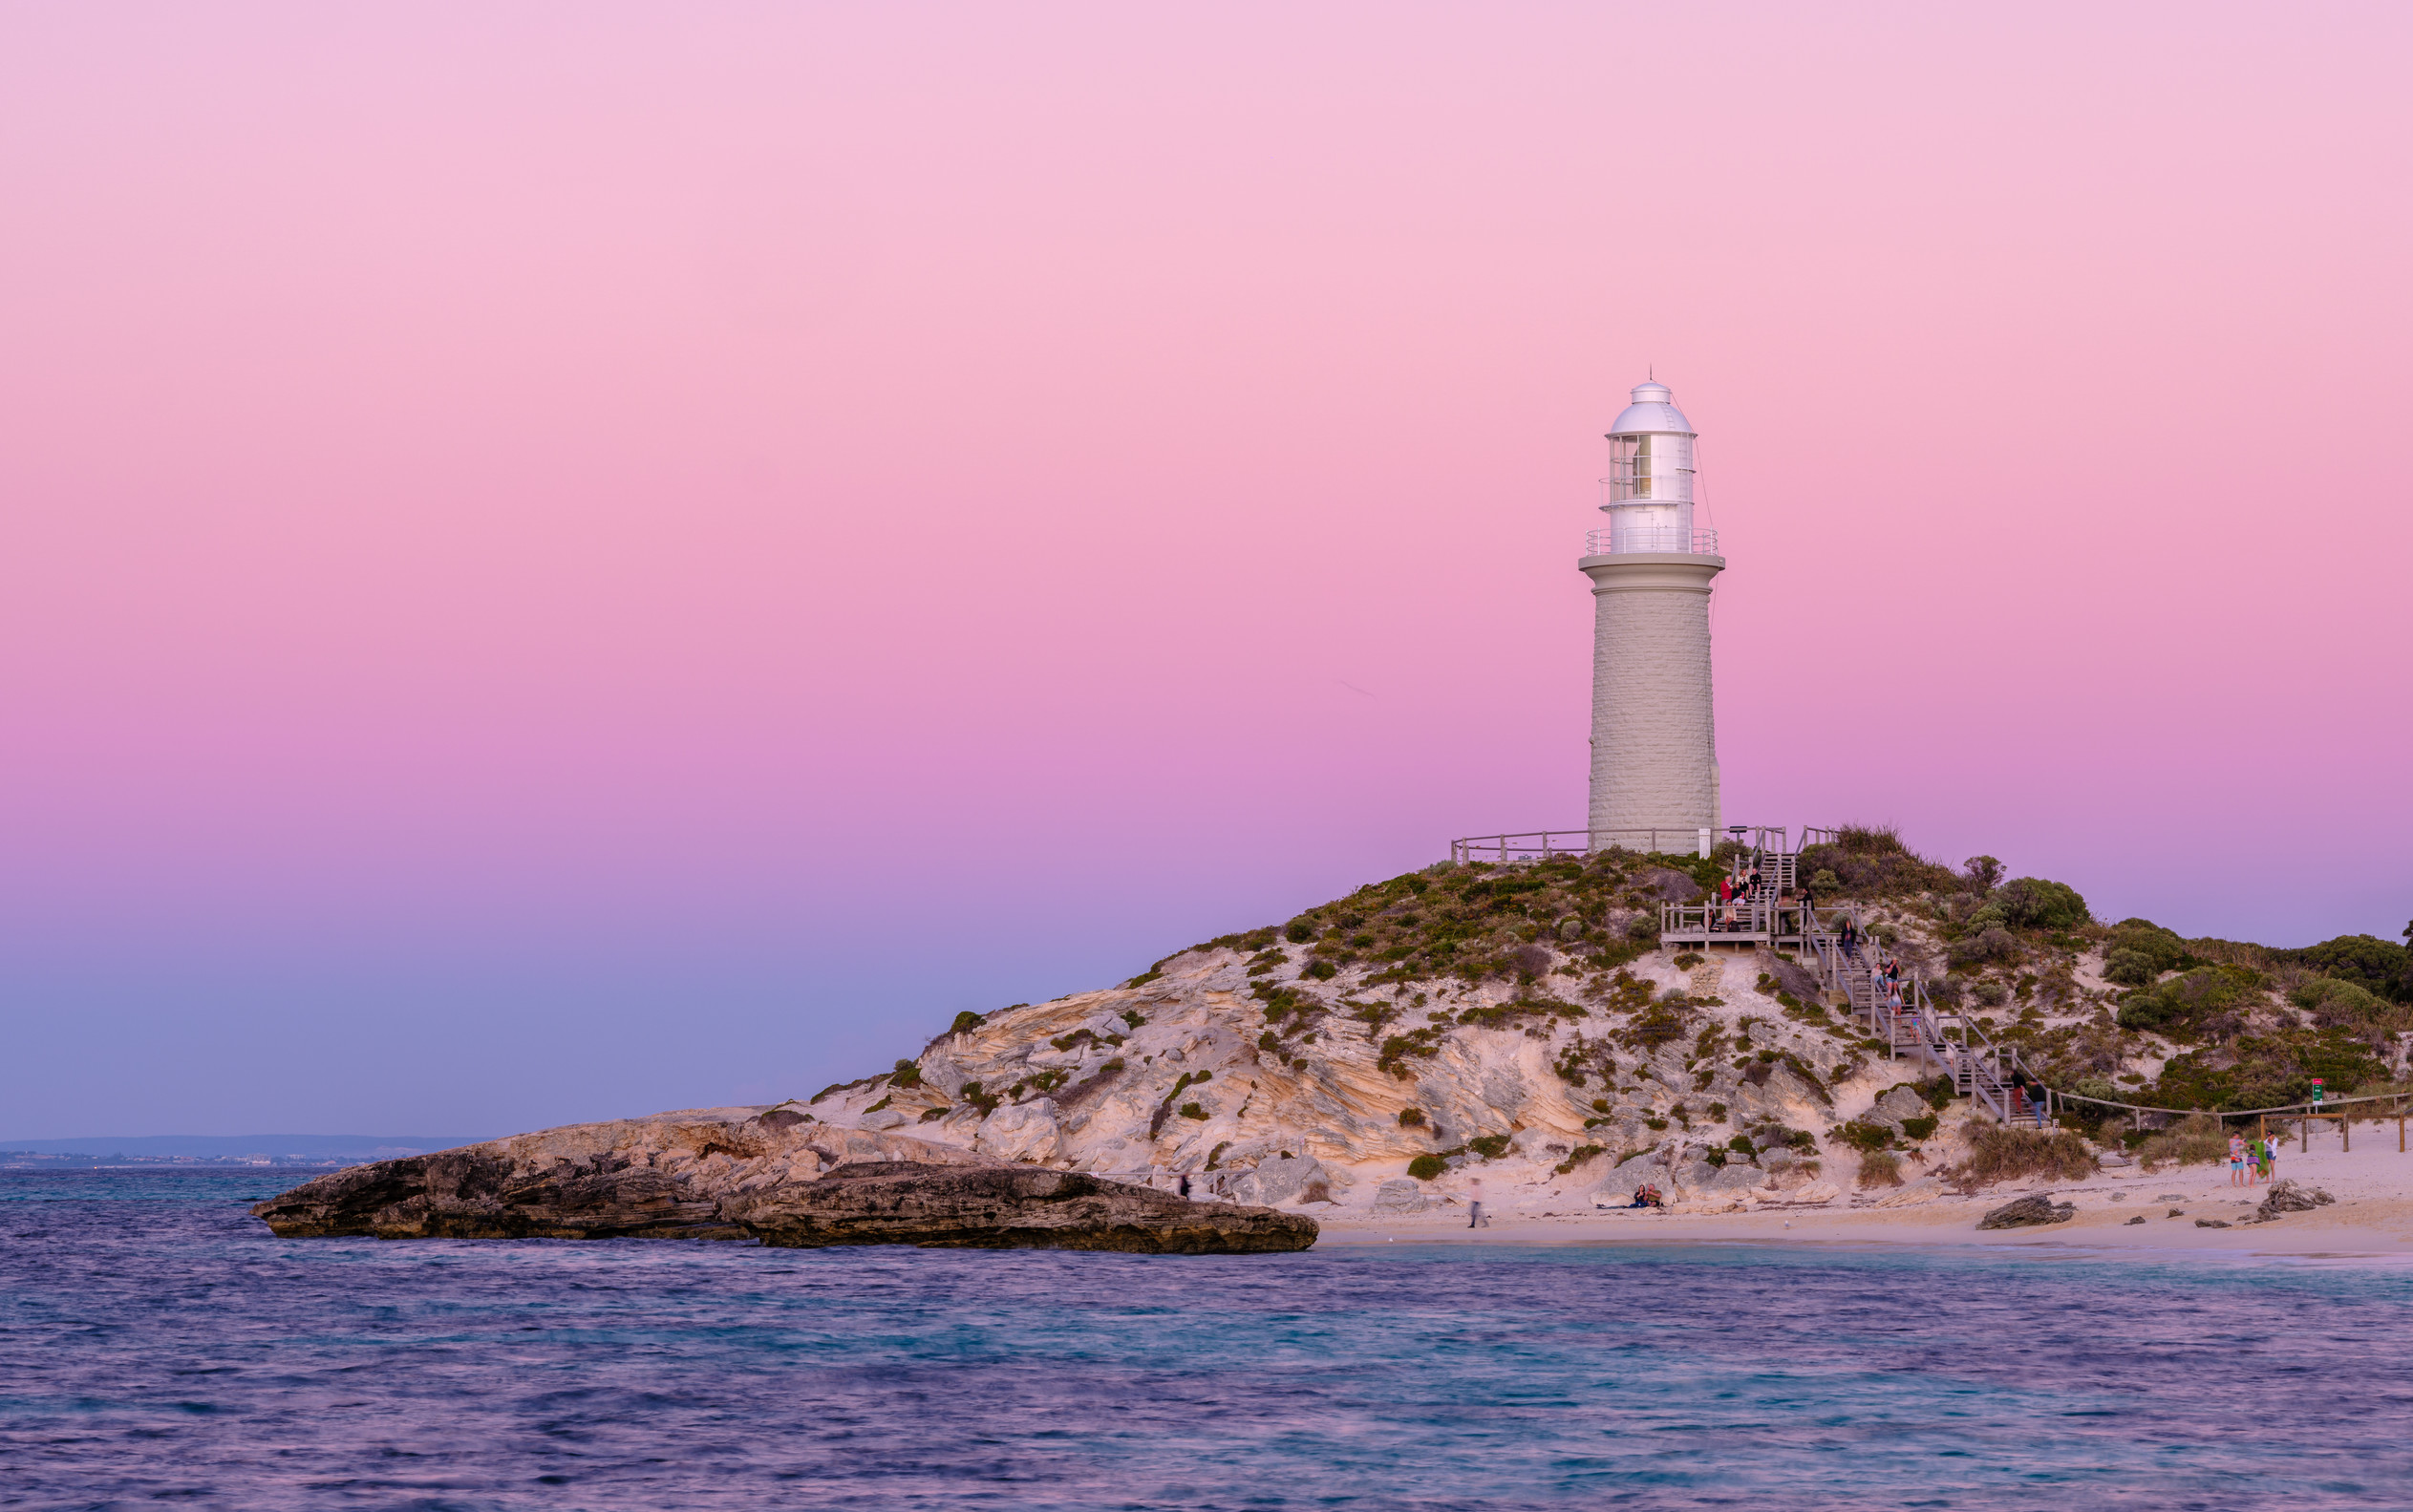 Sunset at Bathurst Lighthouse